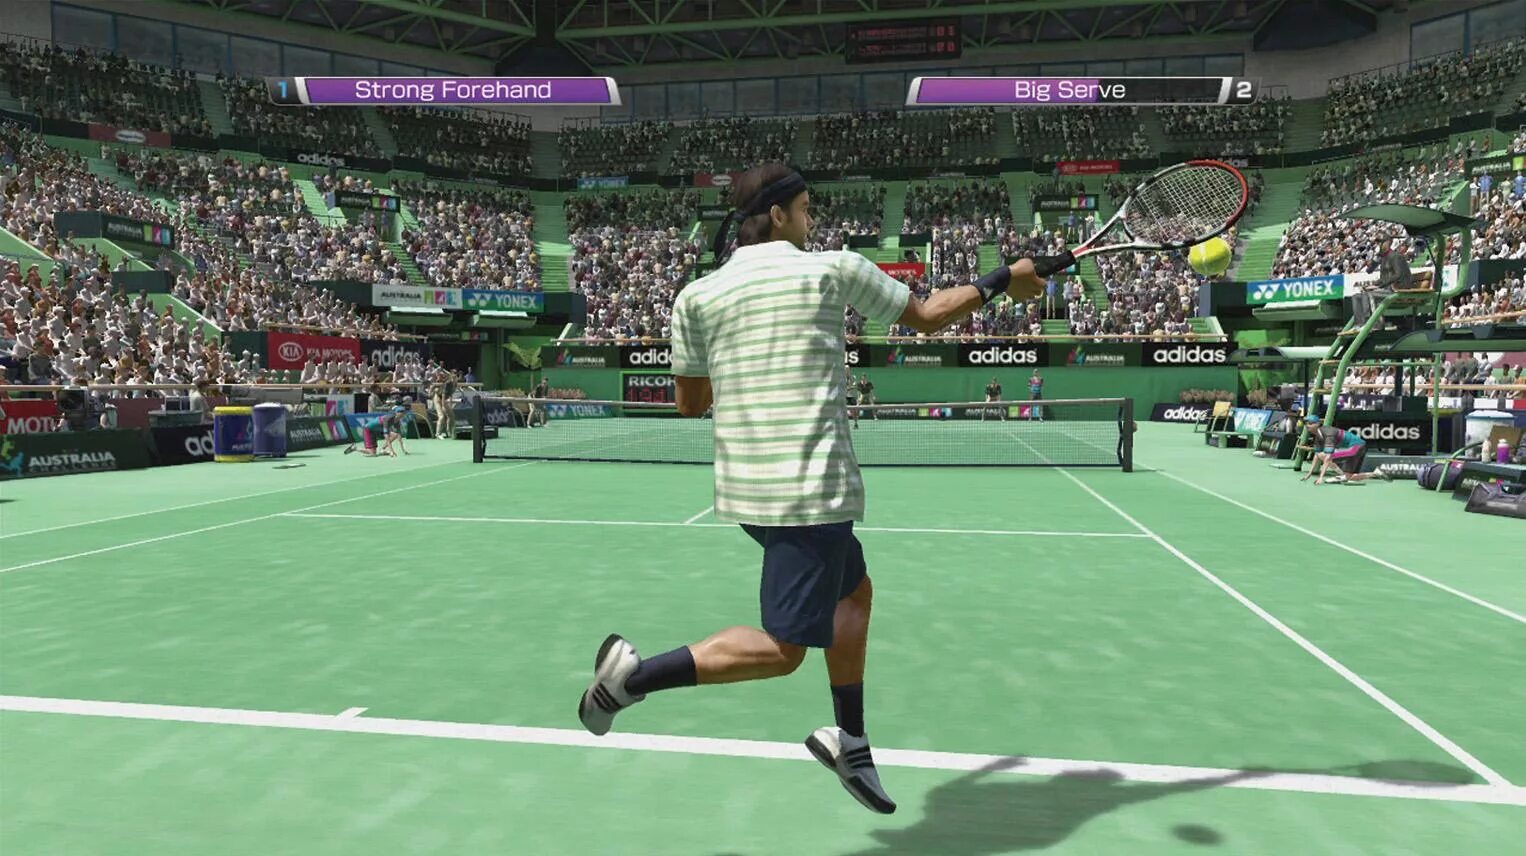 Virtua Tennis 4 на ПК. PLAYSTATION 4 игра теннис. Виртуальный теннис. Гейм в теннисе.